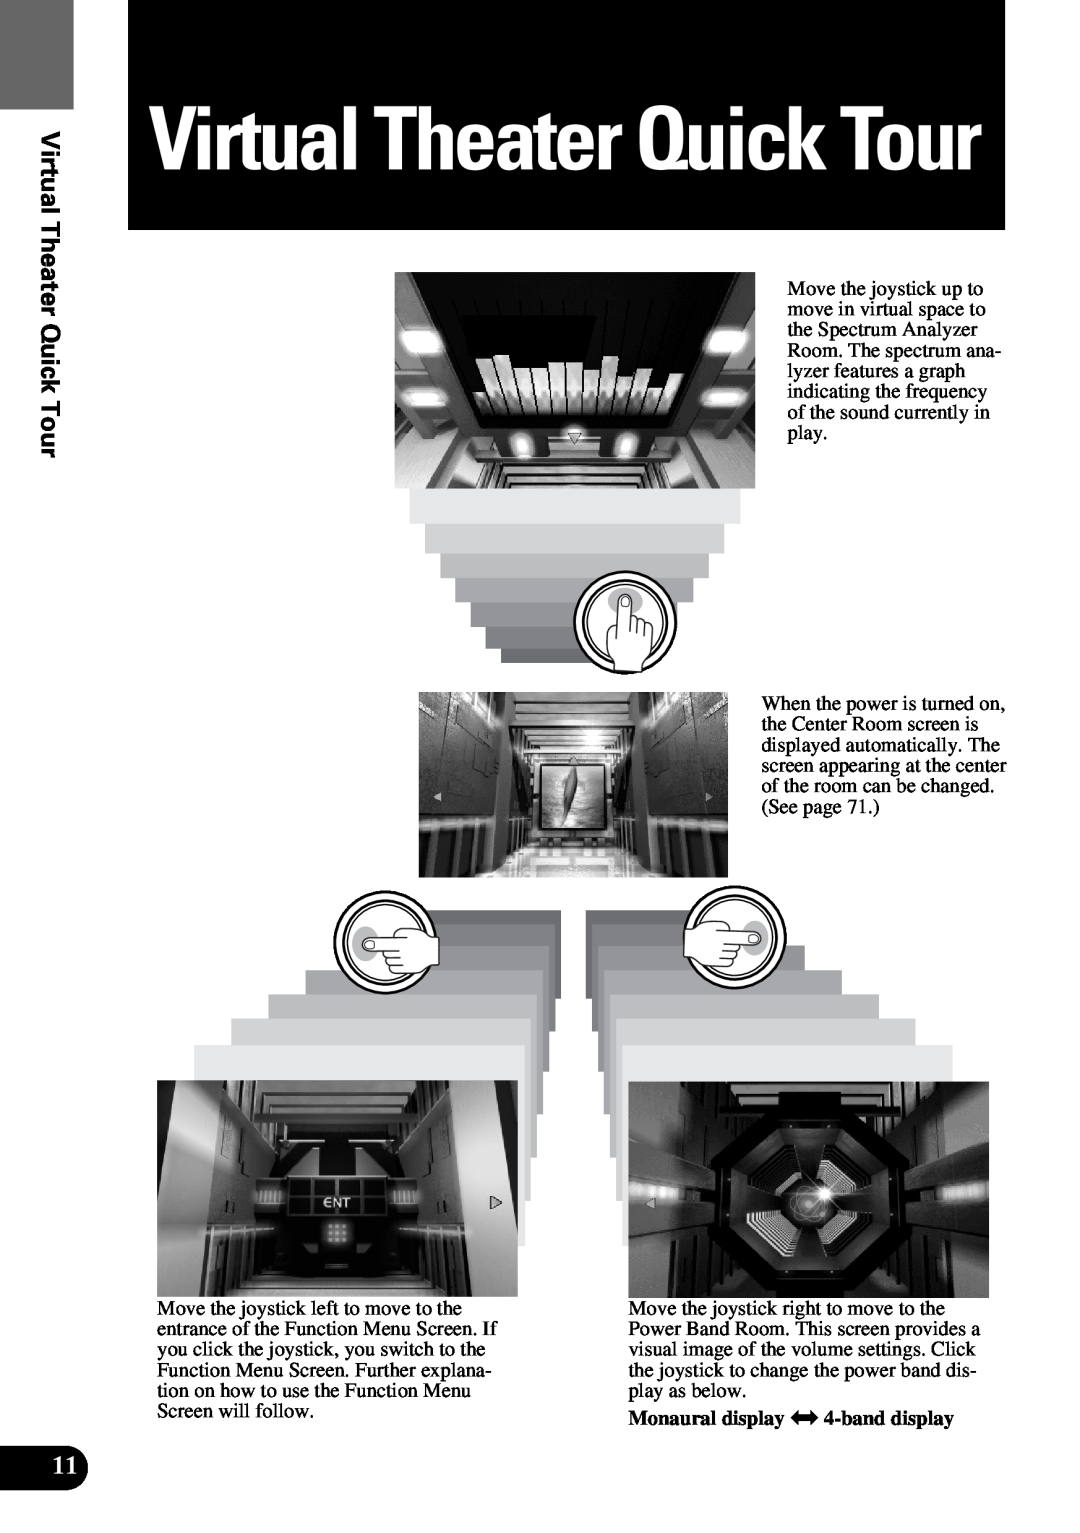 Pioneer AVM-P9000 owner manual Virtual Theater Quick Tour, Monaural display j 4-banddisplay 